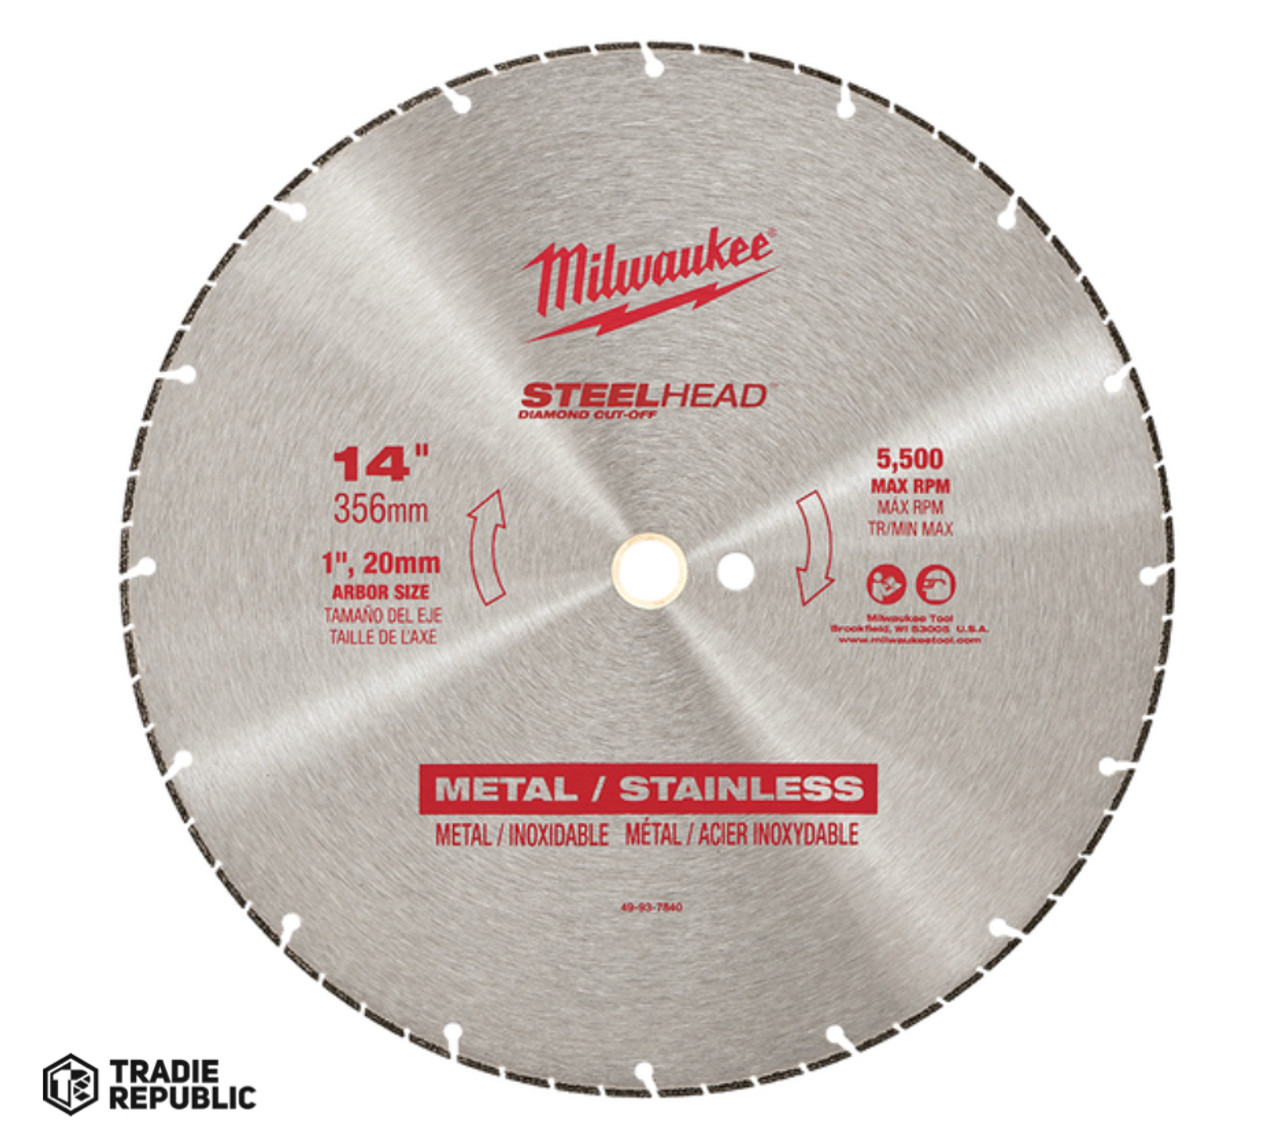 49937840 Milwaukee Steelhead Diamond CutOff 14IN 356mm